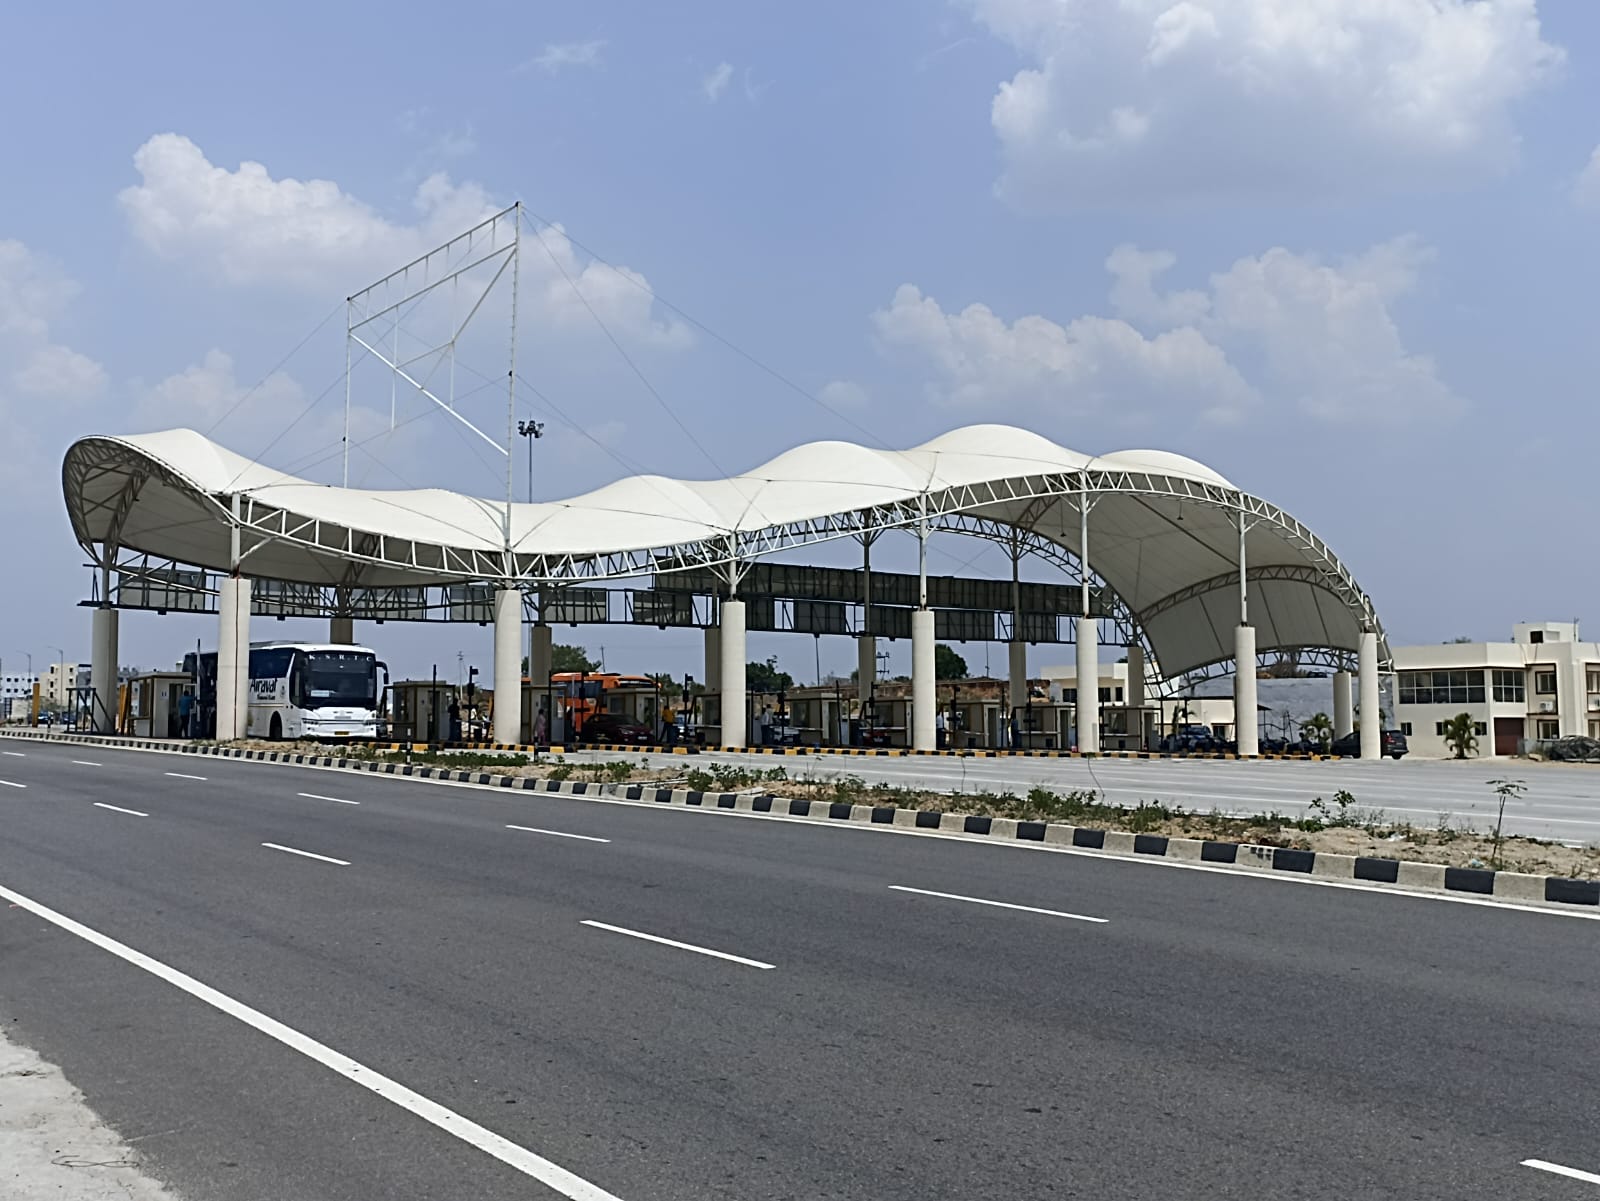 Kaniminike-Sheshagiri Halli plaza on the Bengaluru-Mysuru Expressway.